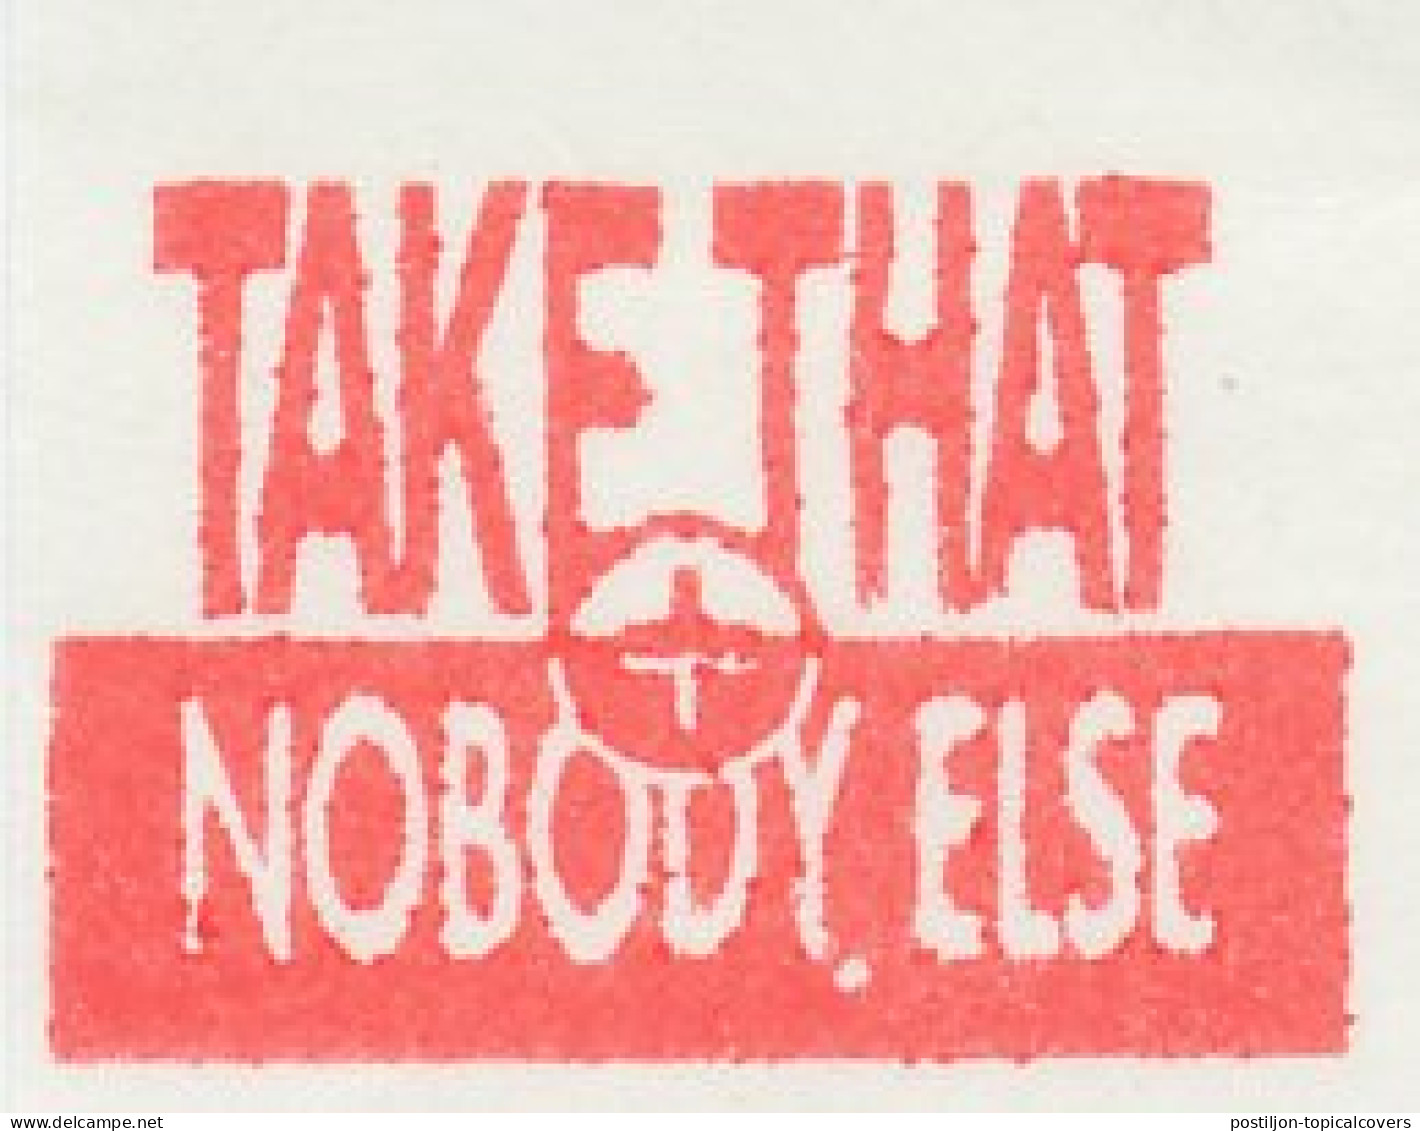 Meter Cut Netherlands 1995 Take That - Album - Nobody Else - Music